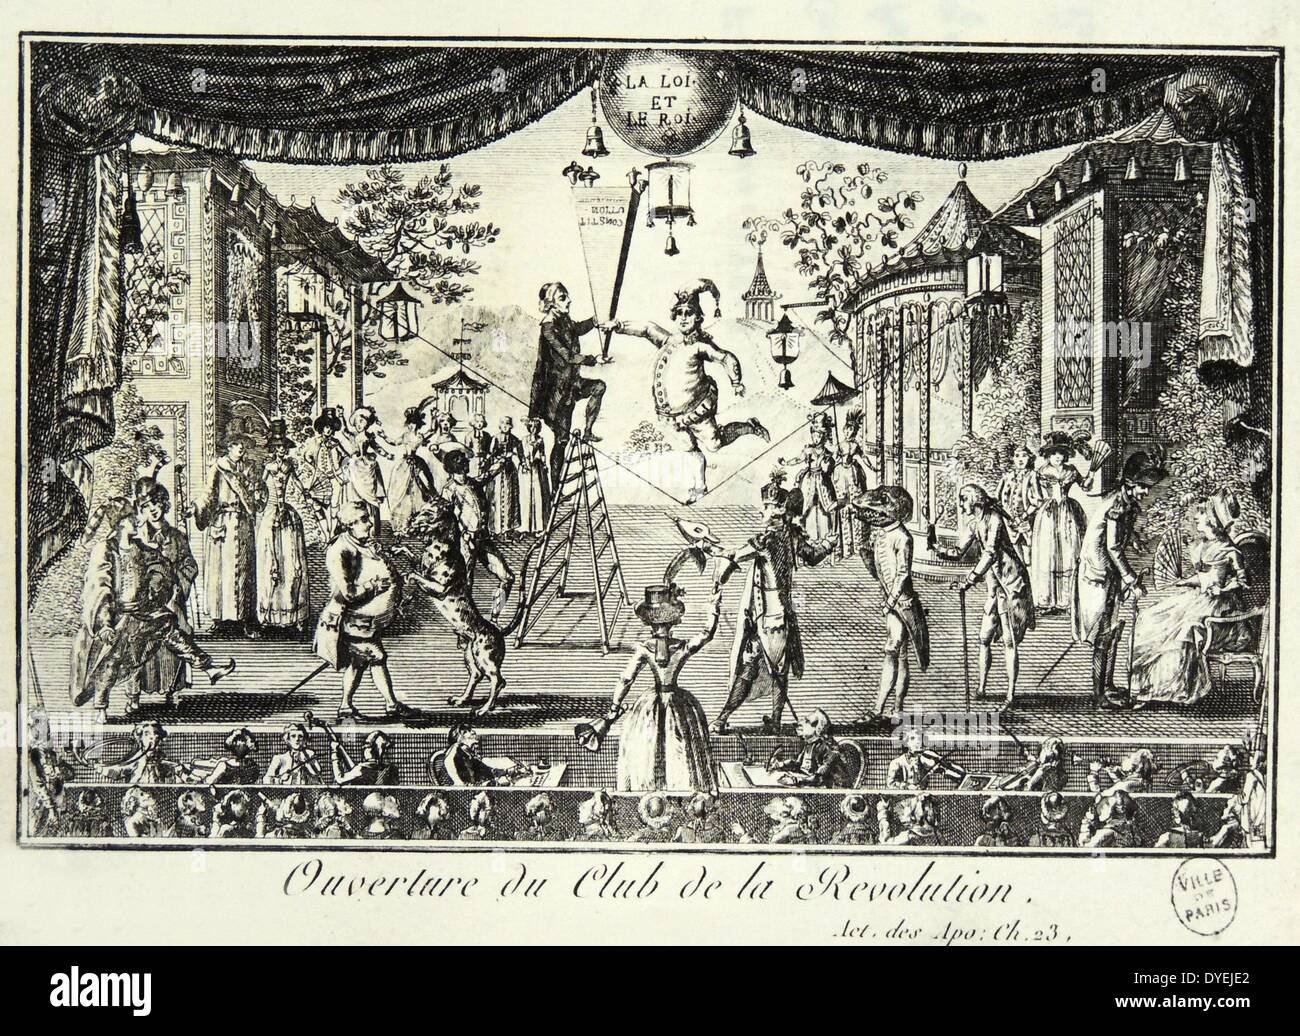 Ouverture du Club de la Révolution depicted in a cartoon illustration of the French revolution period 1789 Stock Photo